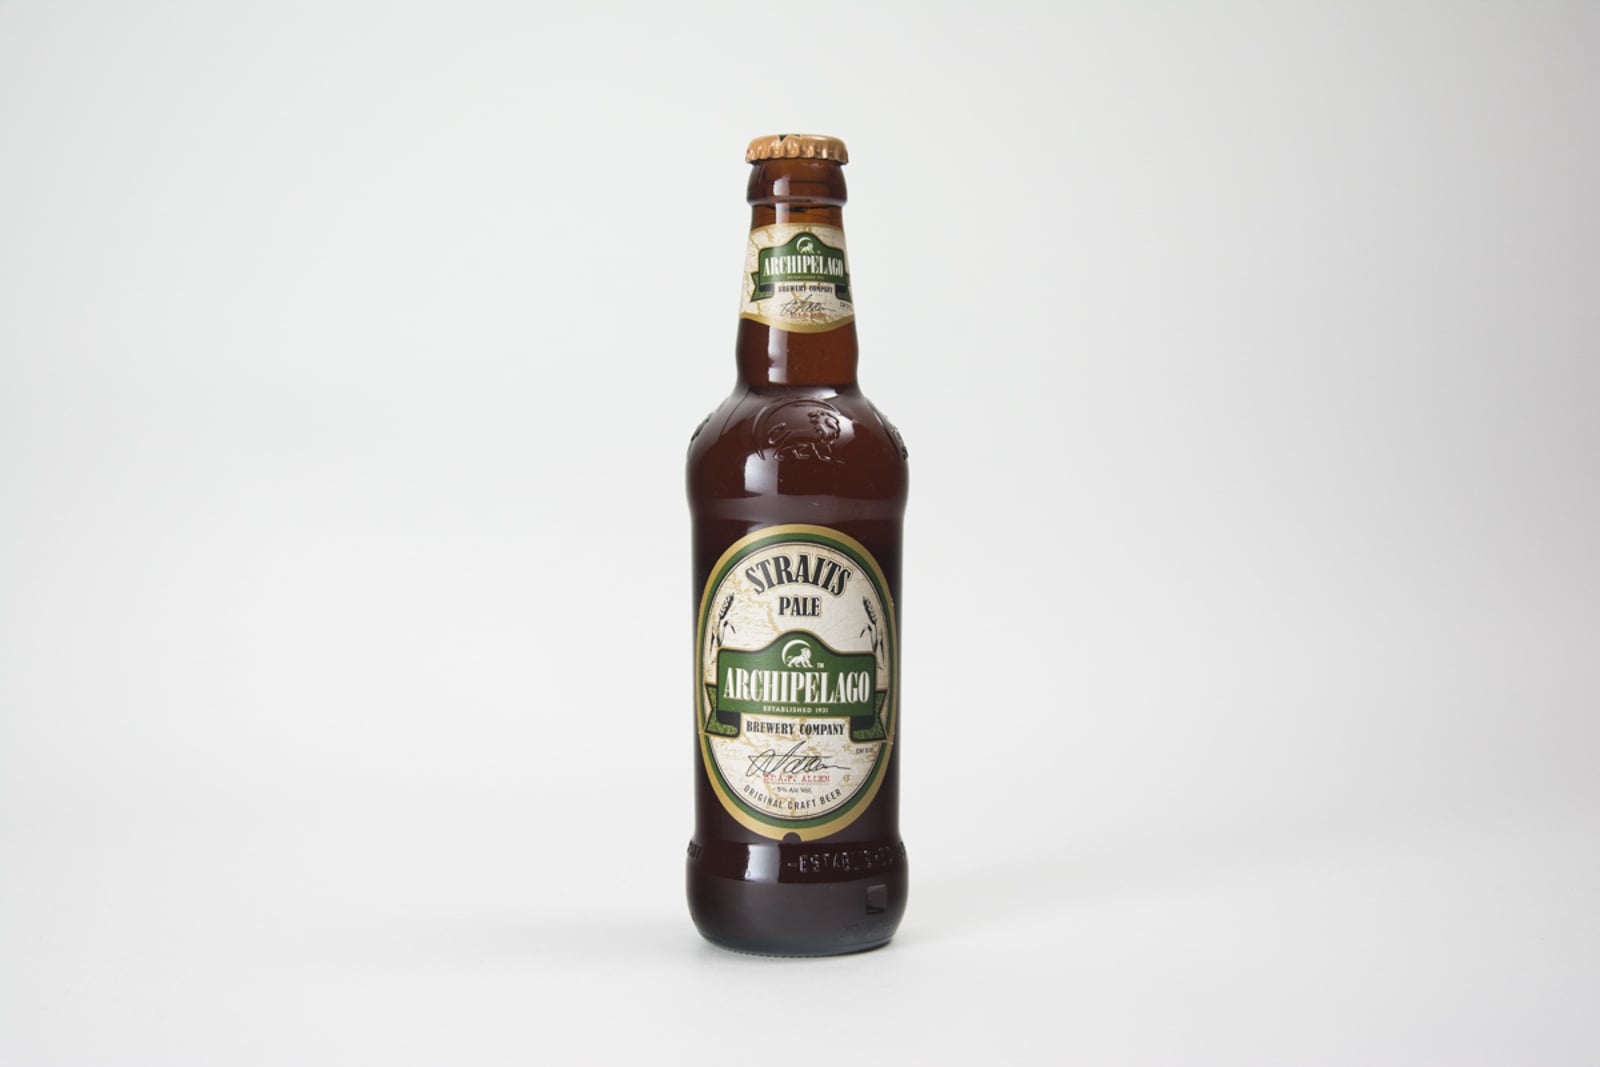 Archipelago Brewery Company's Straits Pale Bottle, 330 ml